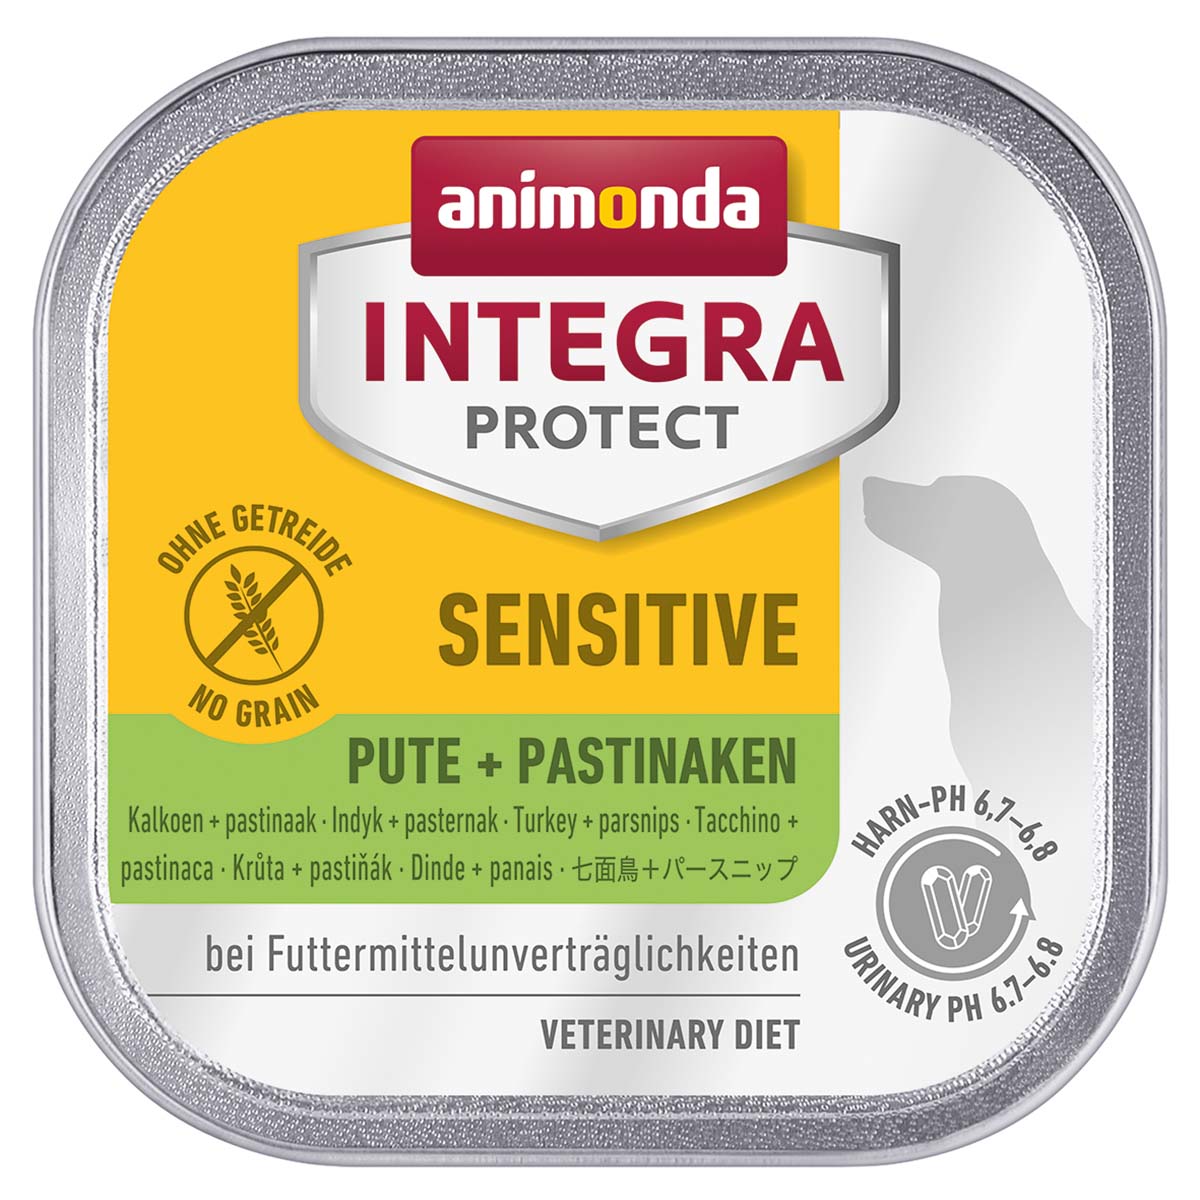 animonda Integra Protect Sensitive Pute und Pastinaken 22x150g von animonda Integra Protect